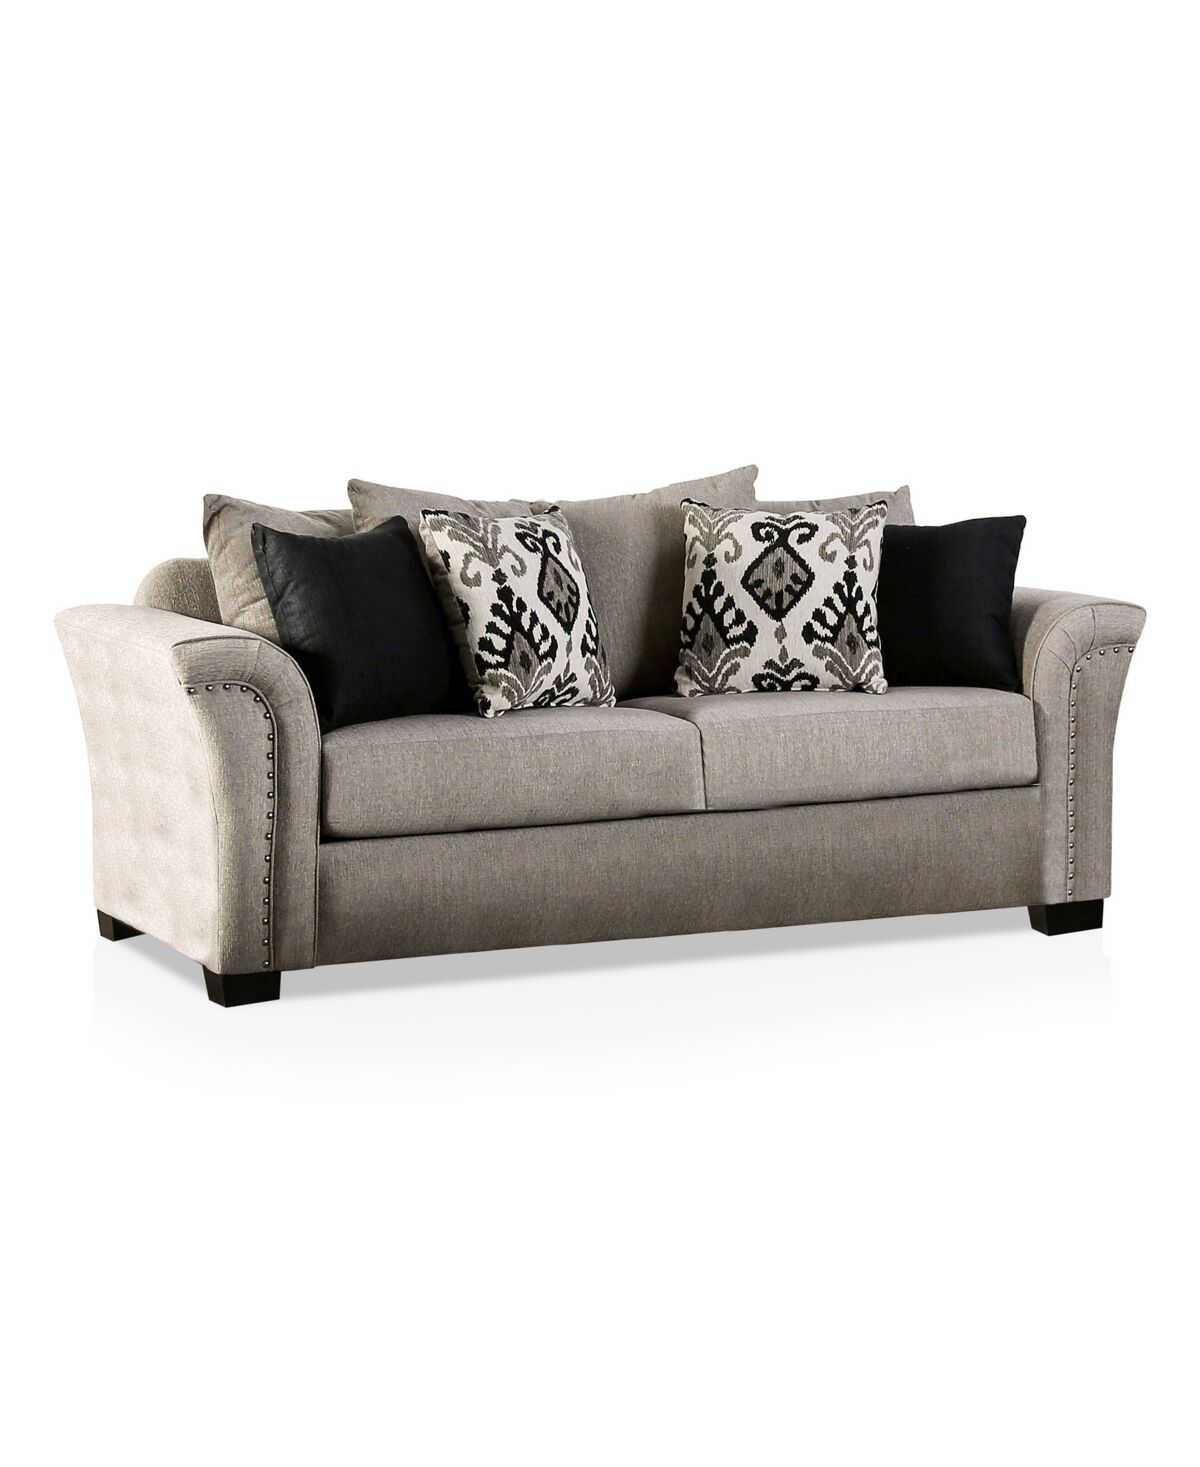 Furniture Of America Varney Upholstered Sofa - Light Taupe, Black